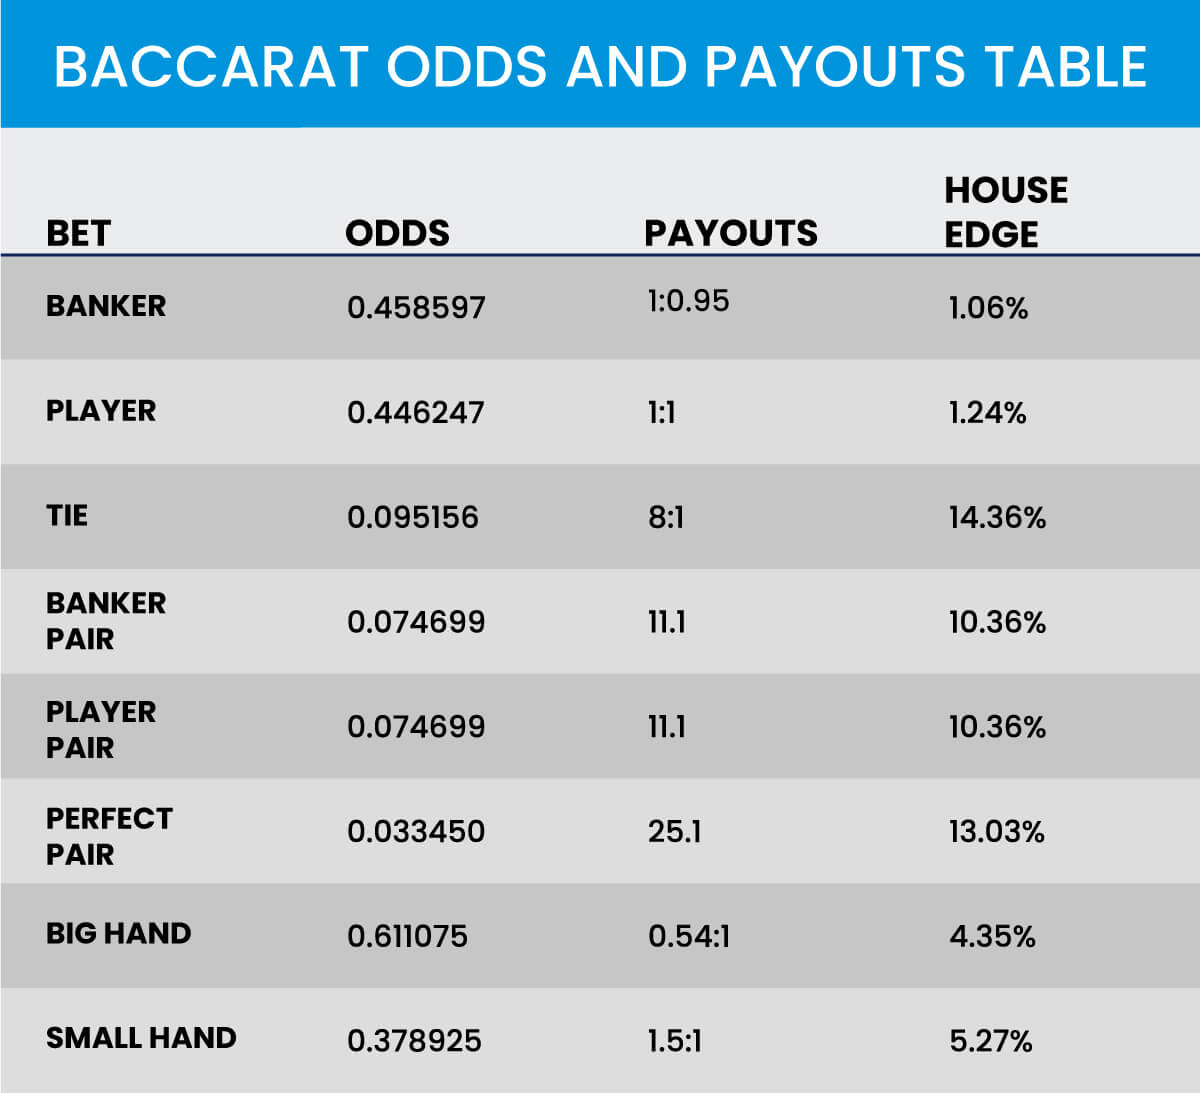 Baccarat odds